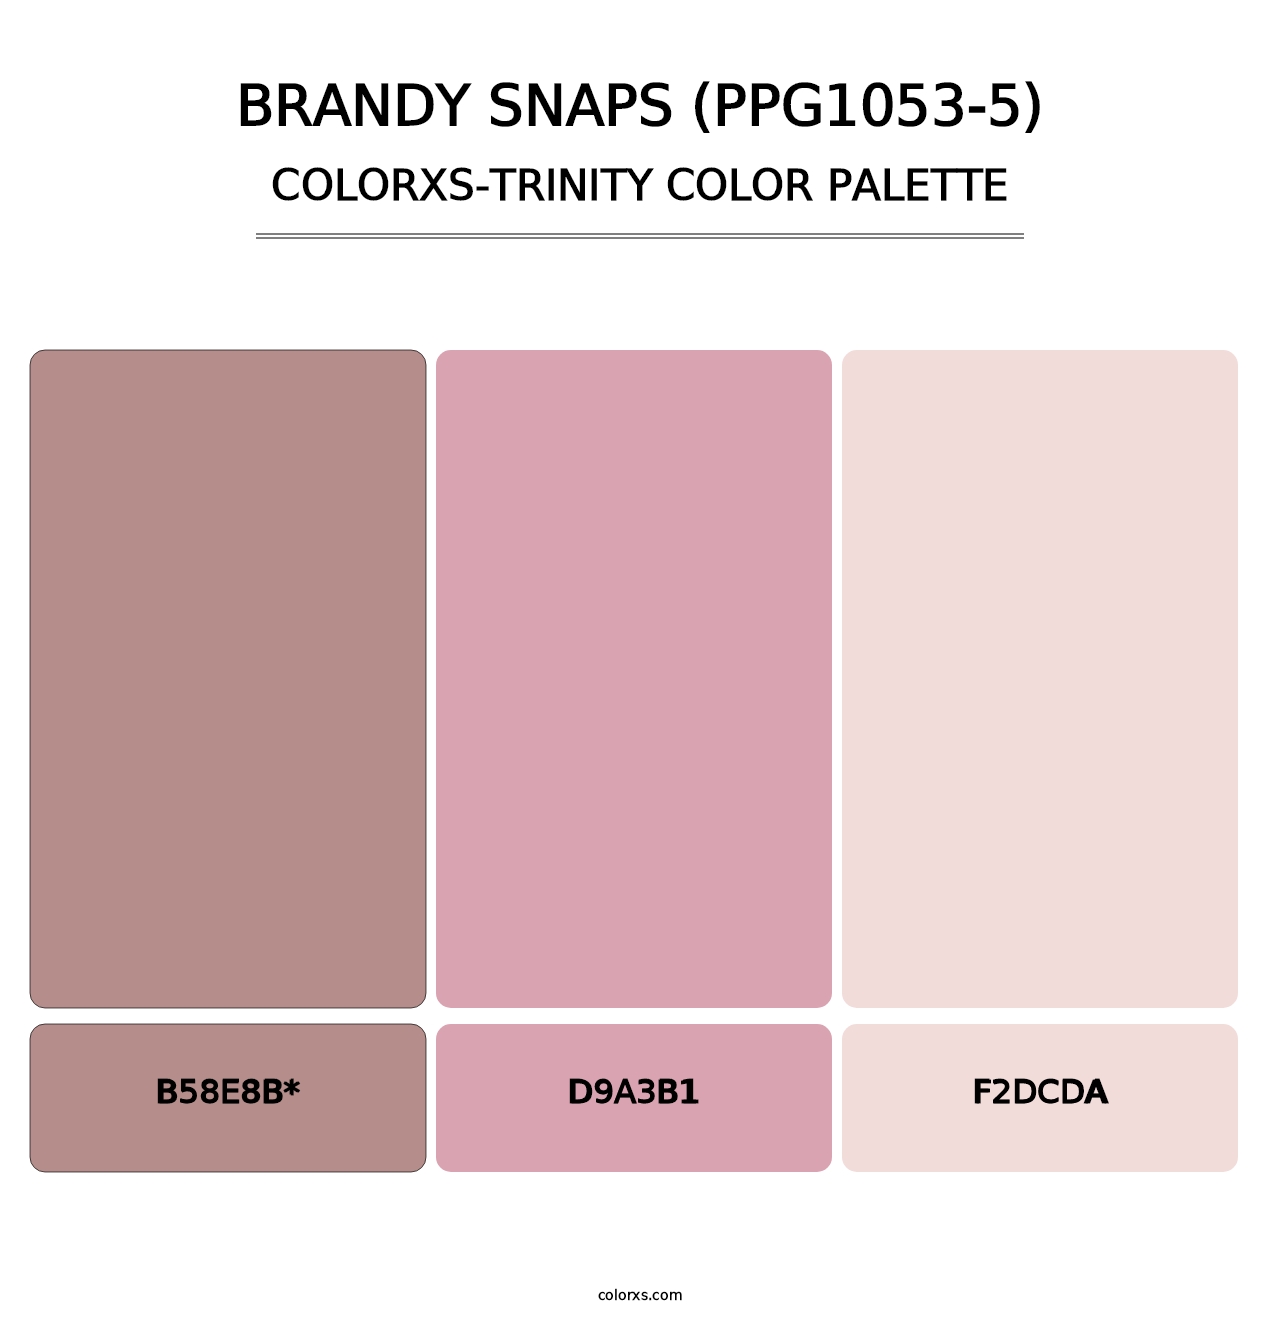 Brandy Snaps (PPG1053-5) - Colorxs Trinity Palette